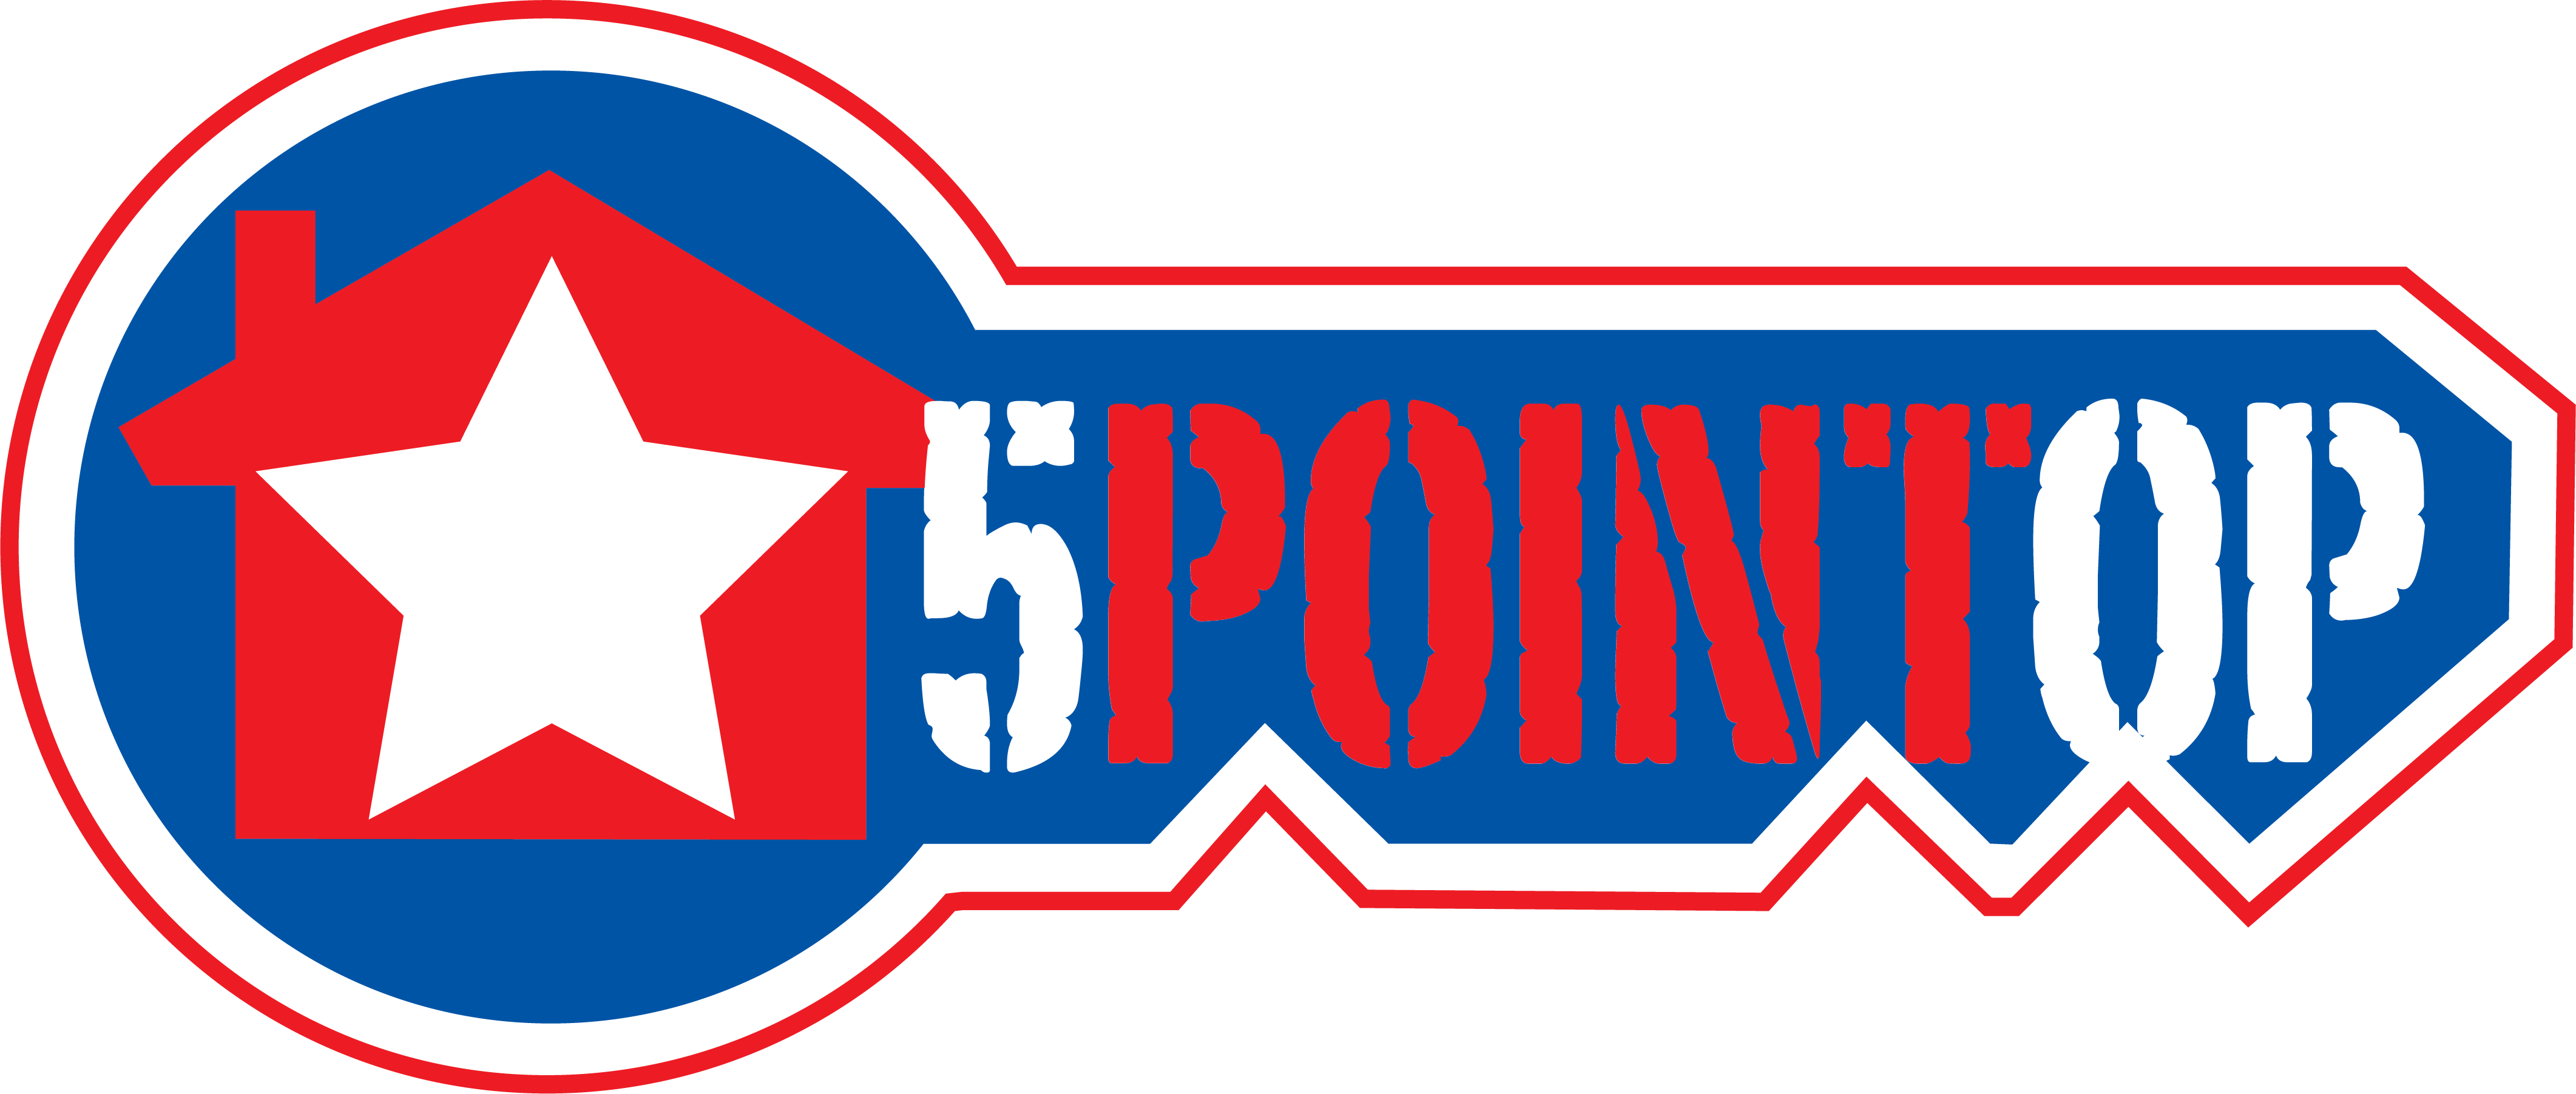 5PointOp logo 4C Final